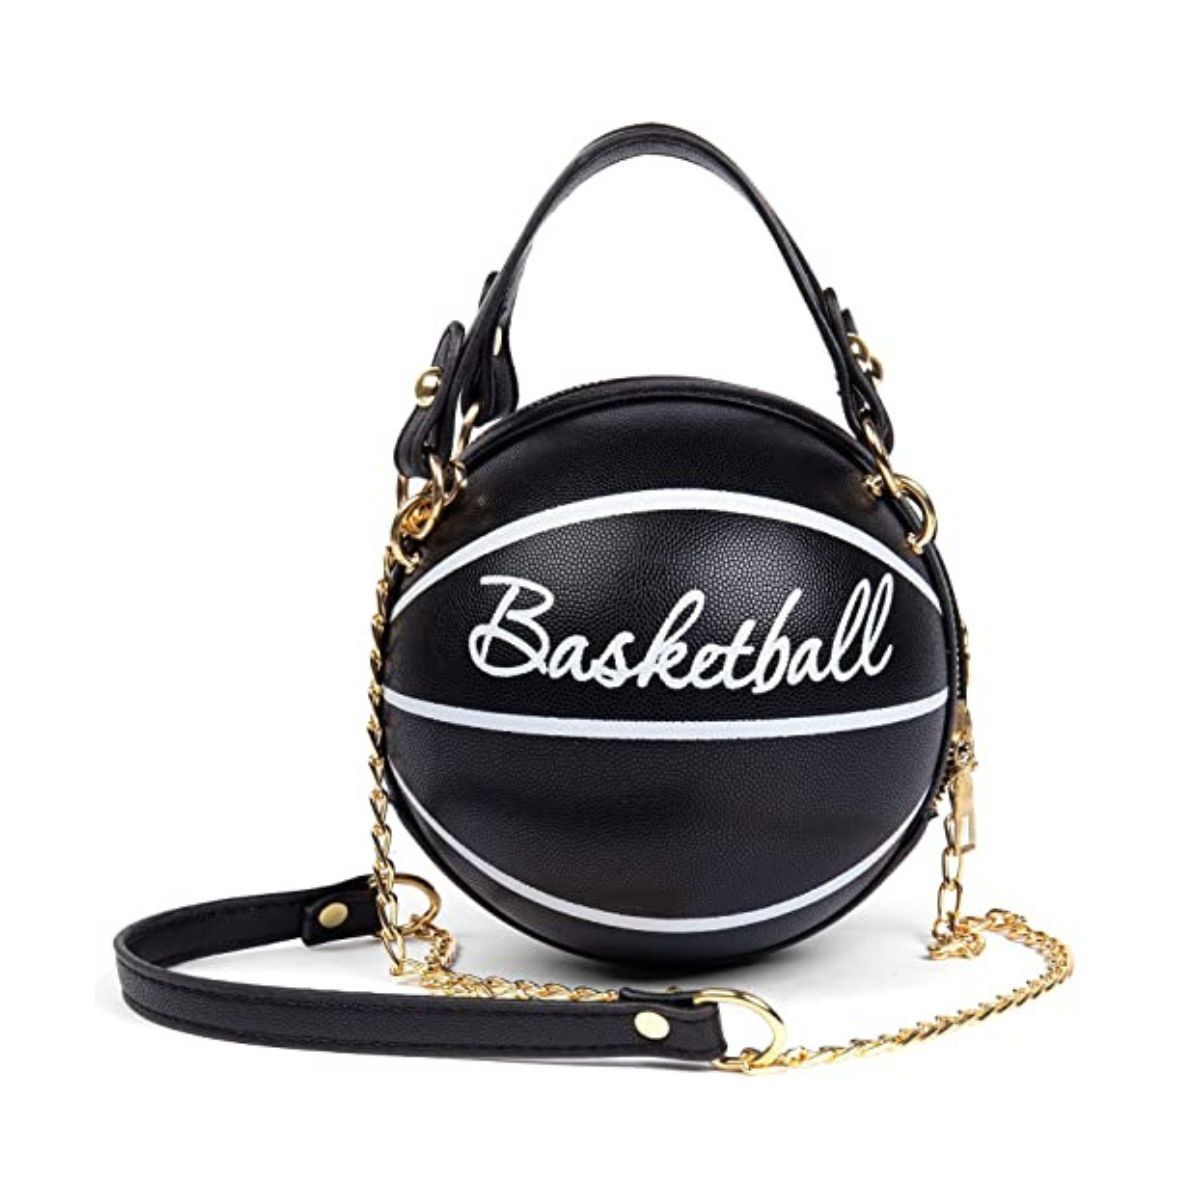 Clutch Black Basketball Bag for Women